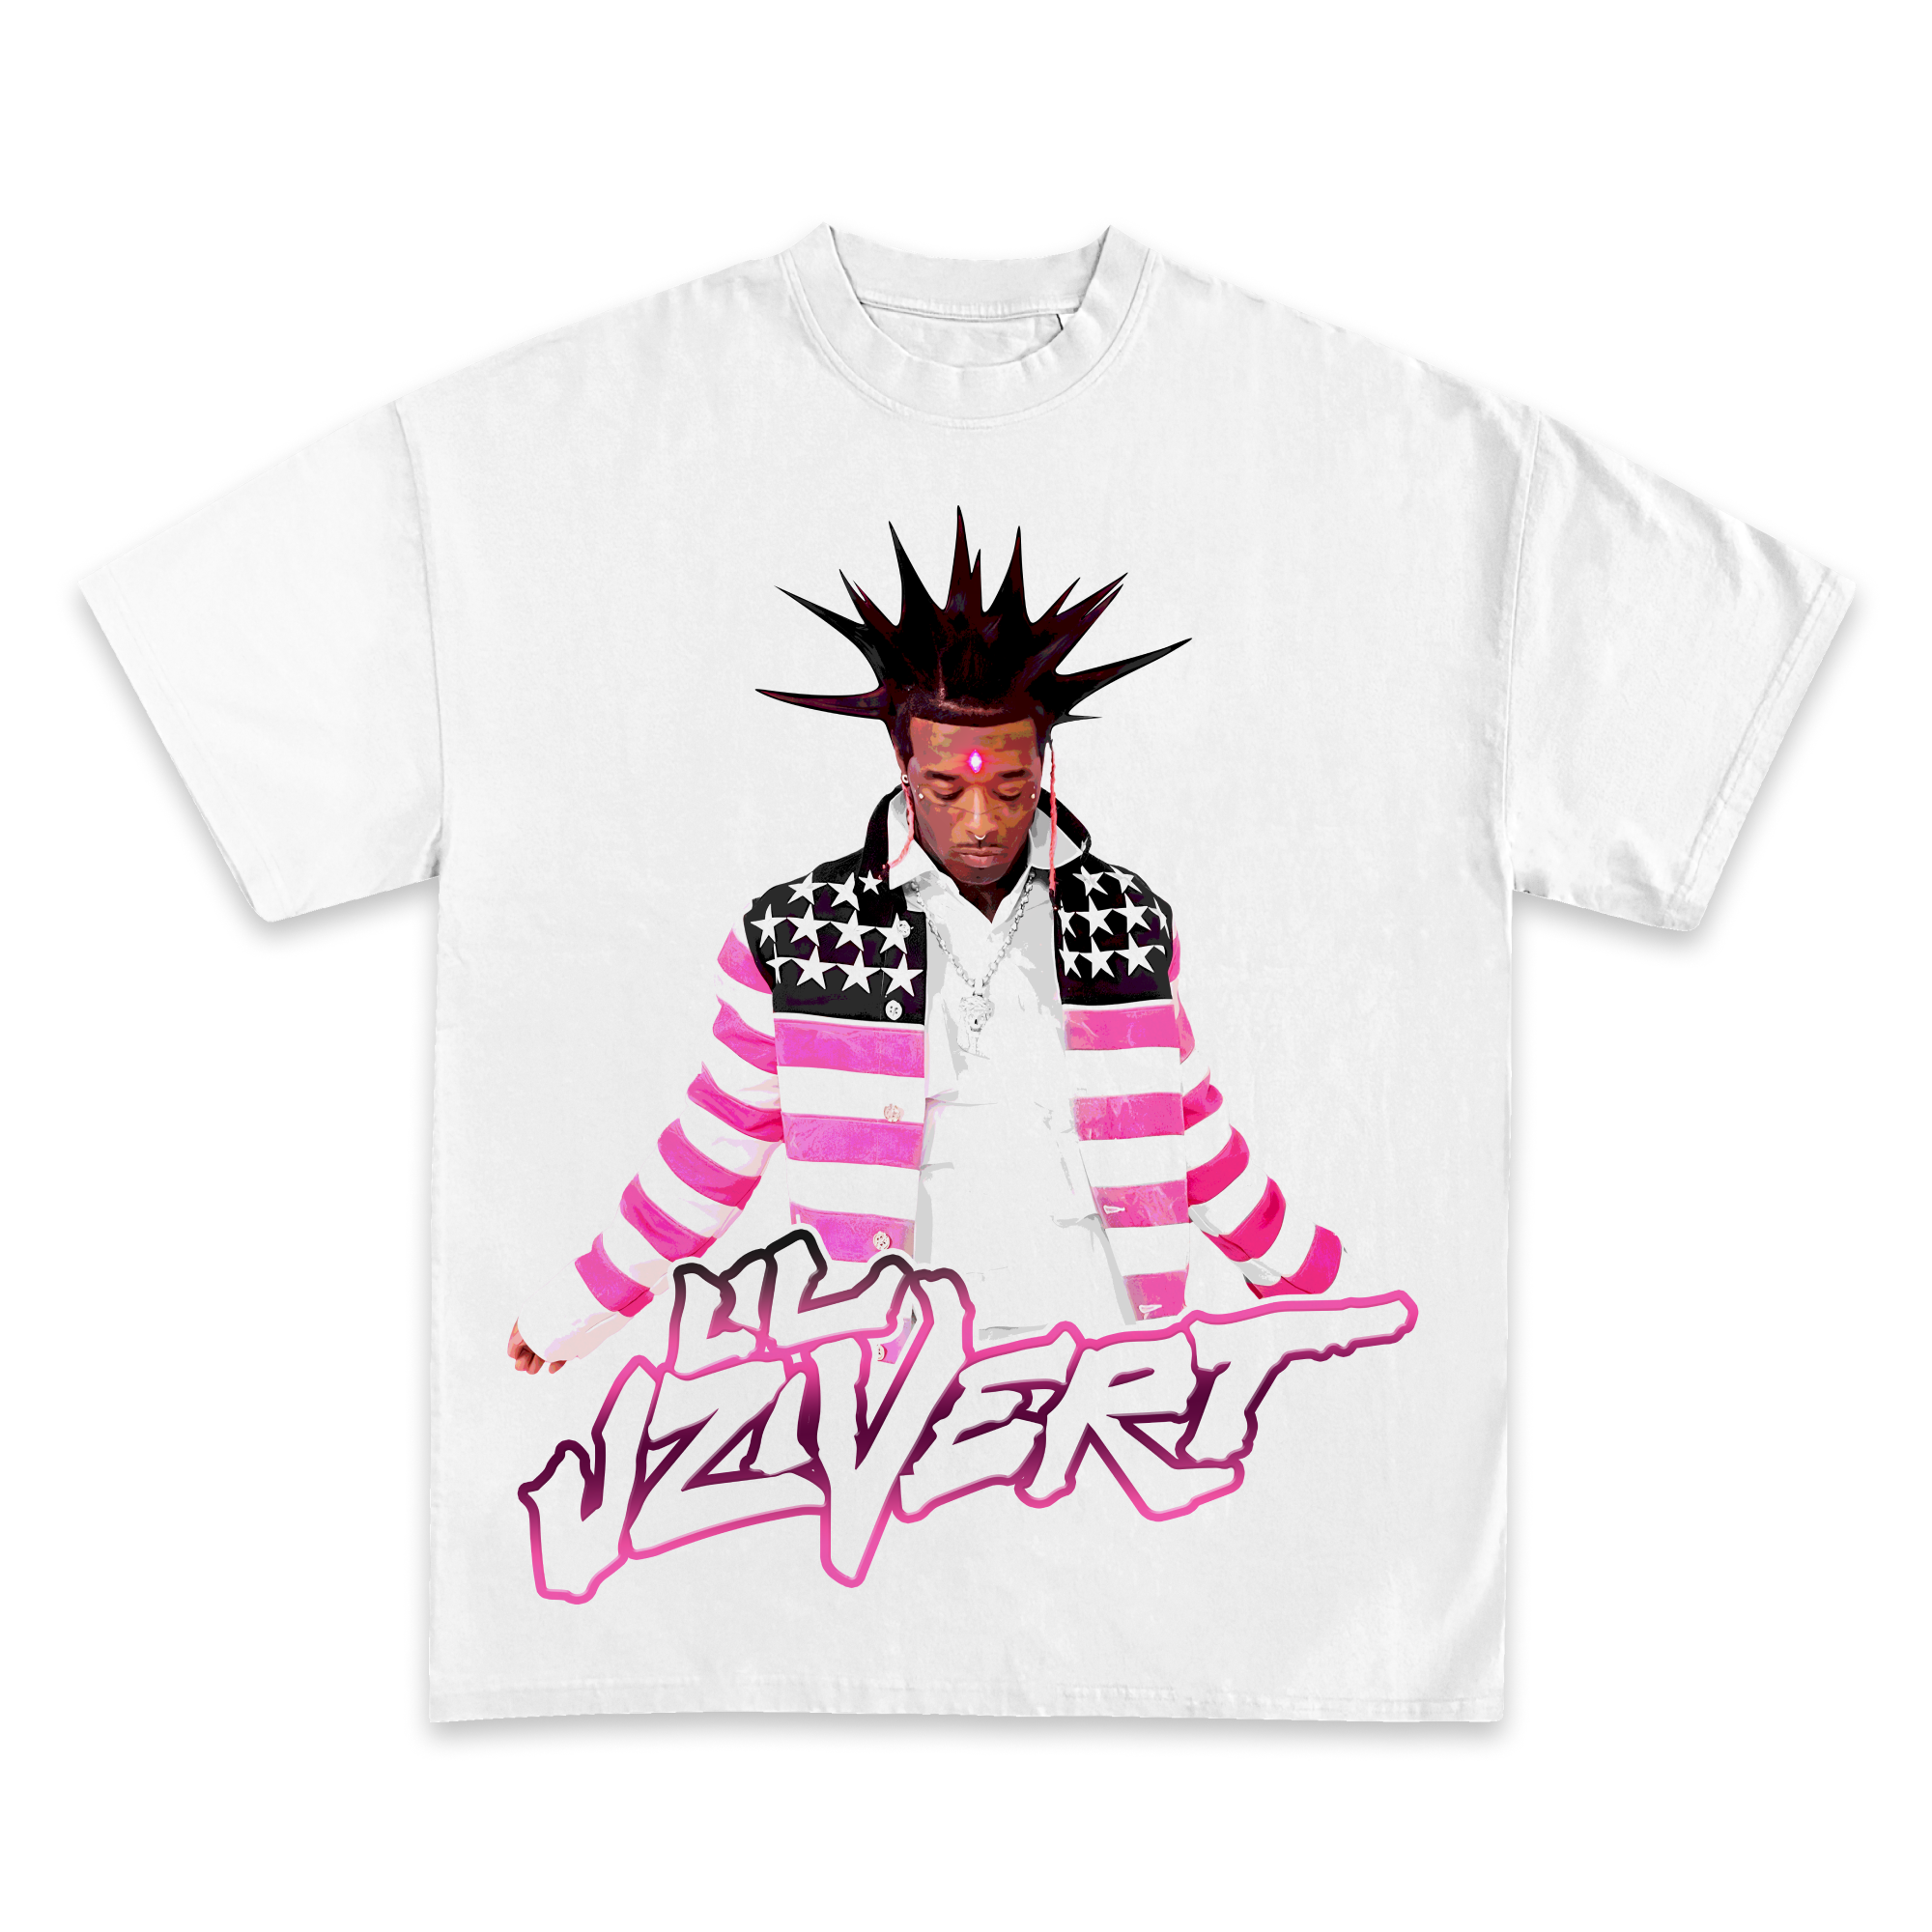 Lil Uzi Vert Pink Tape Graphic T-Shirt